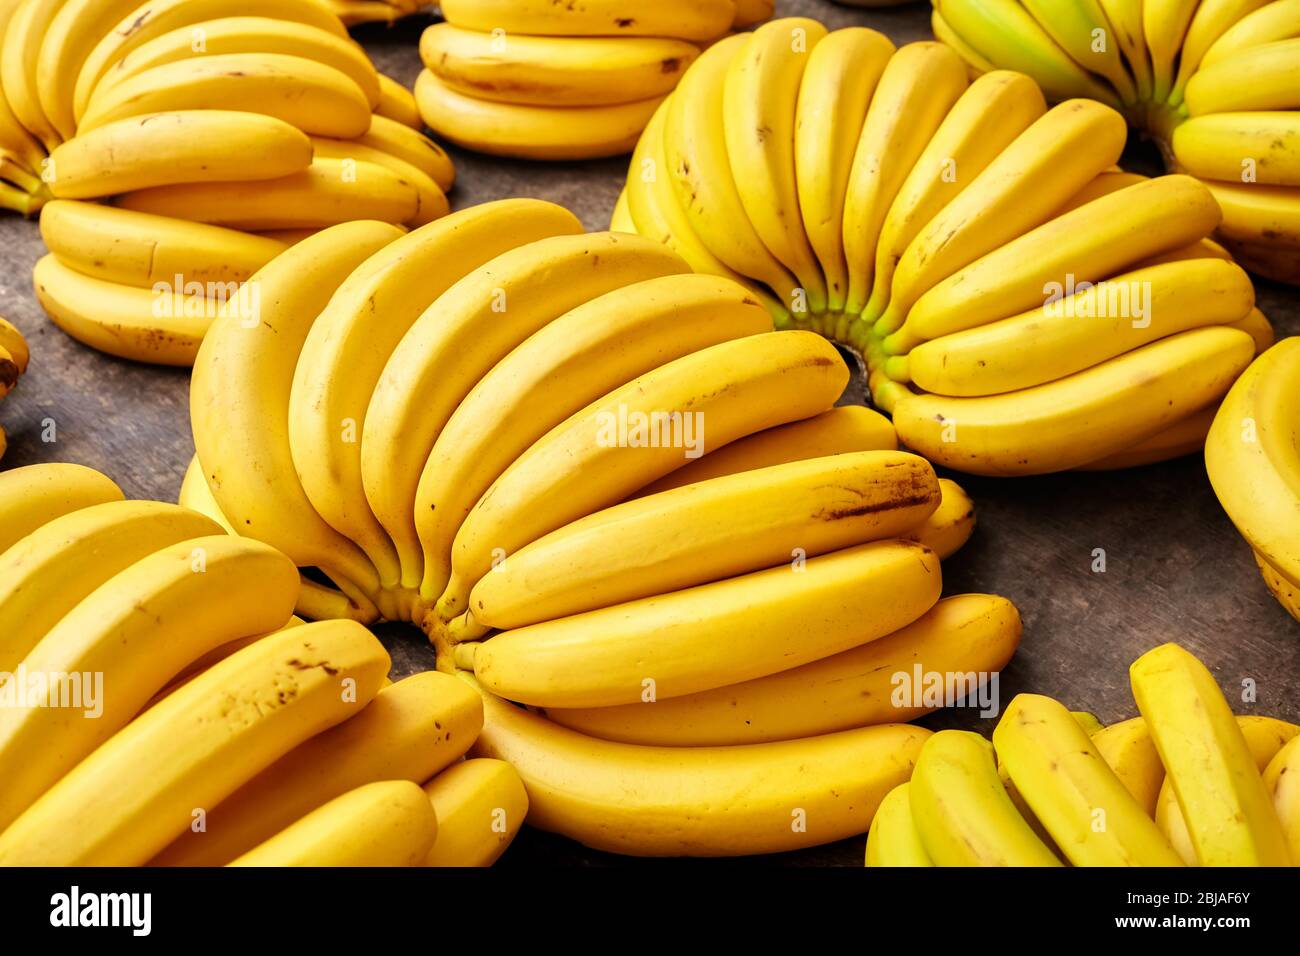 Download free photo of Banana,bunch,fruit,food,bananas - from